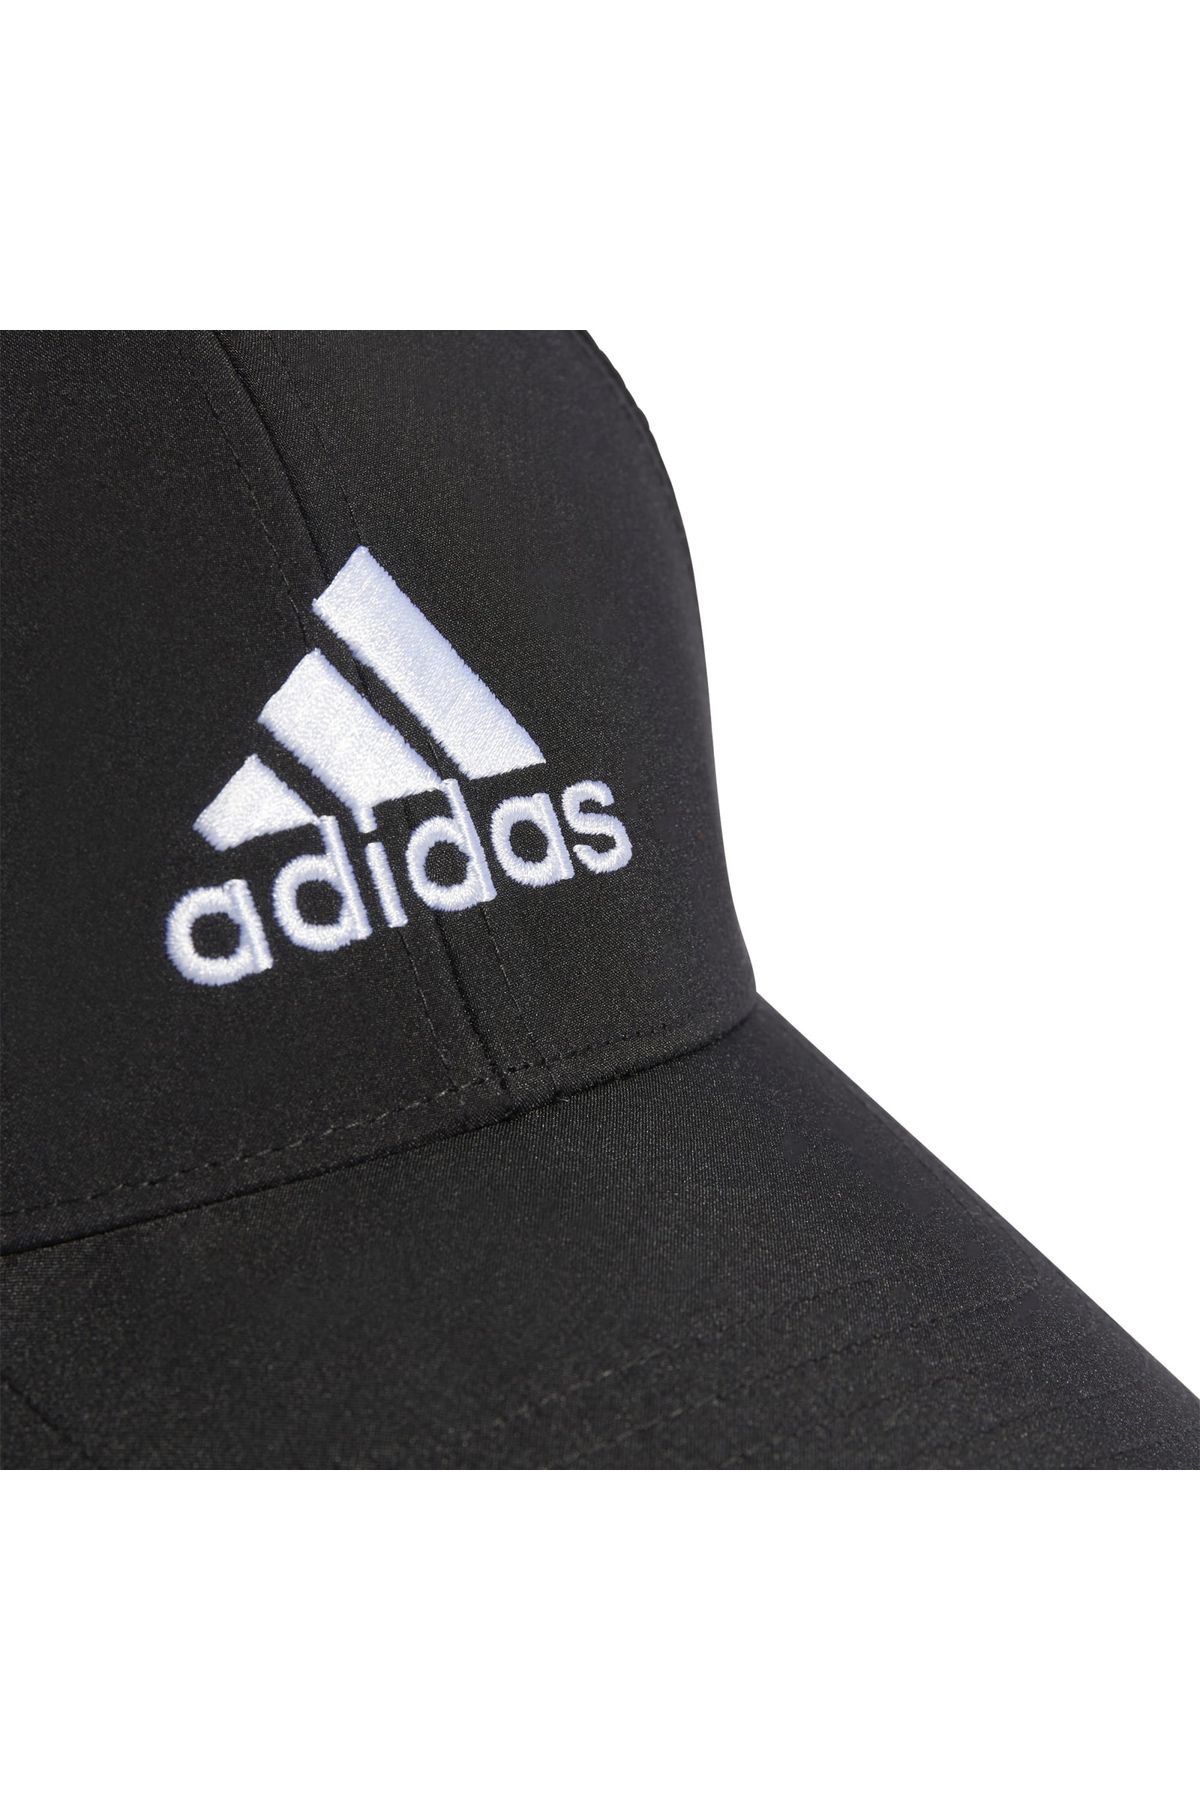 adidas ib3244-u adidas bballcap lt emb hat black